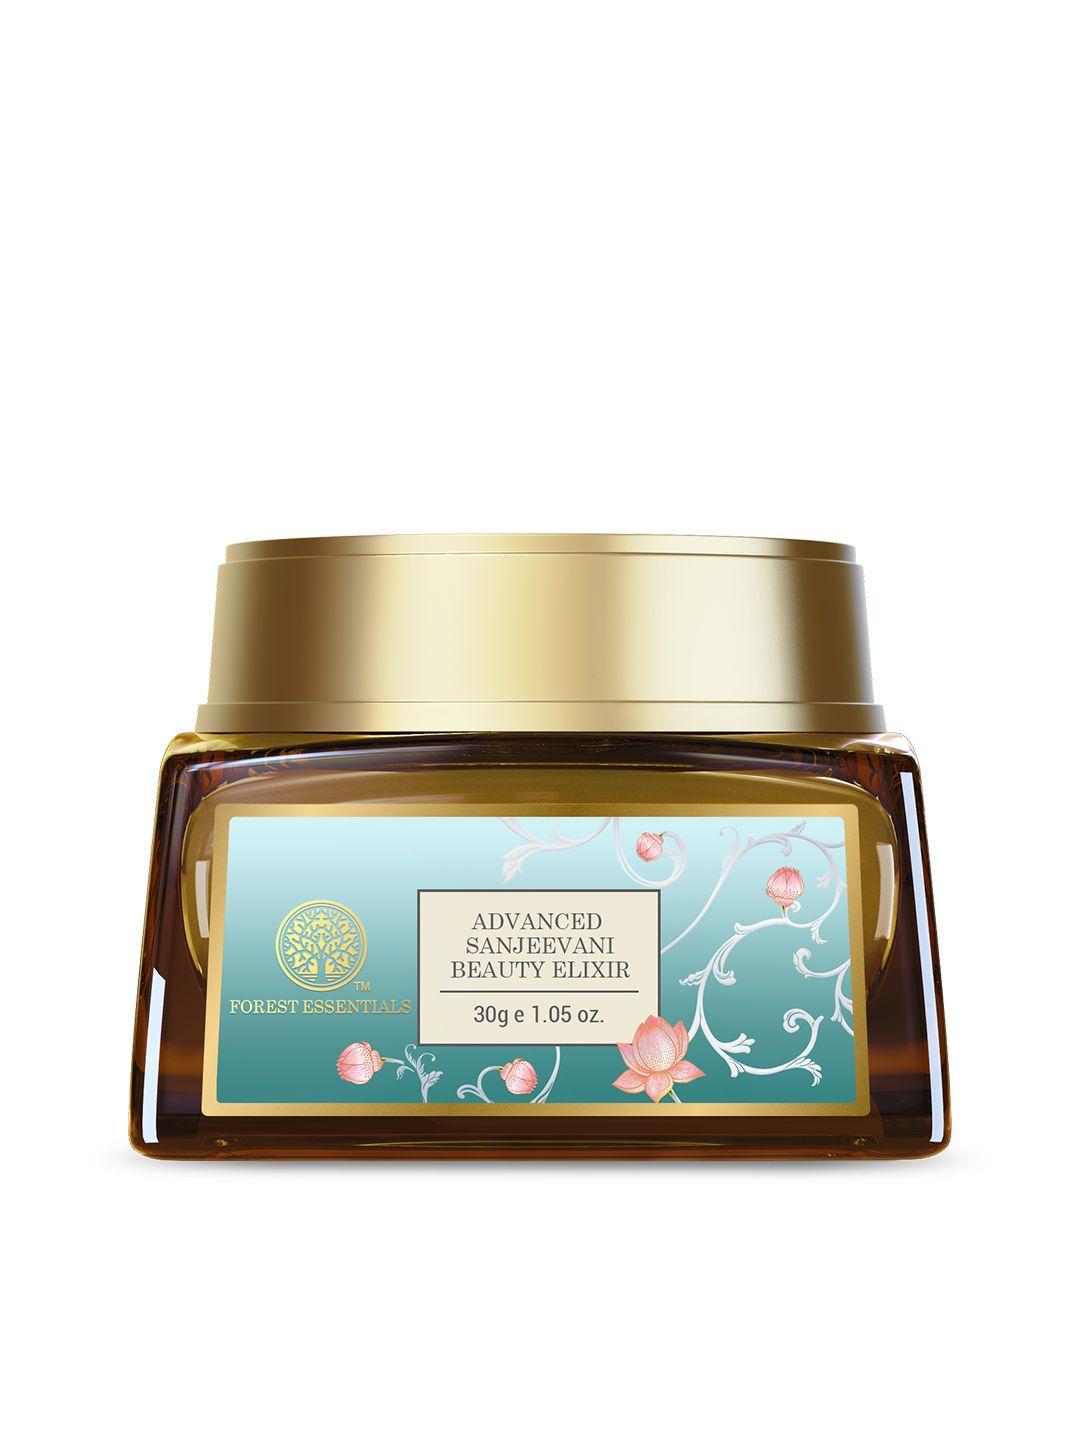 forest essentials advanced sanjeevani beauty elixir ayurvedic anti-aging face cream - 30g